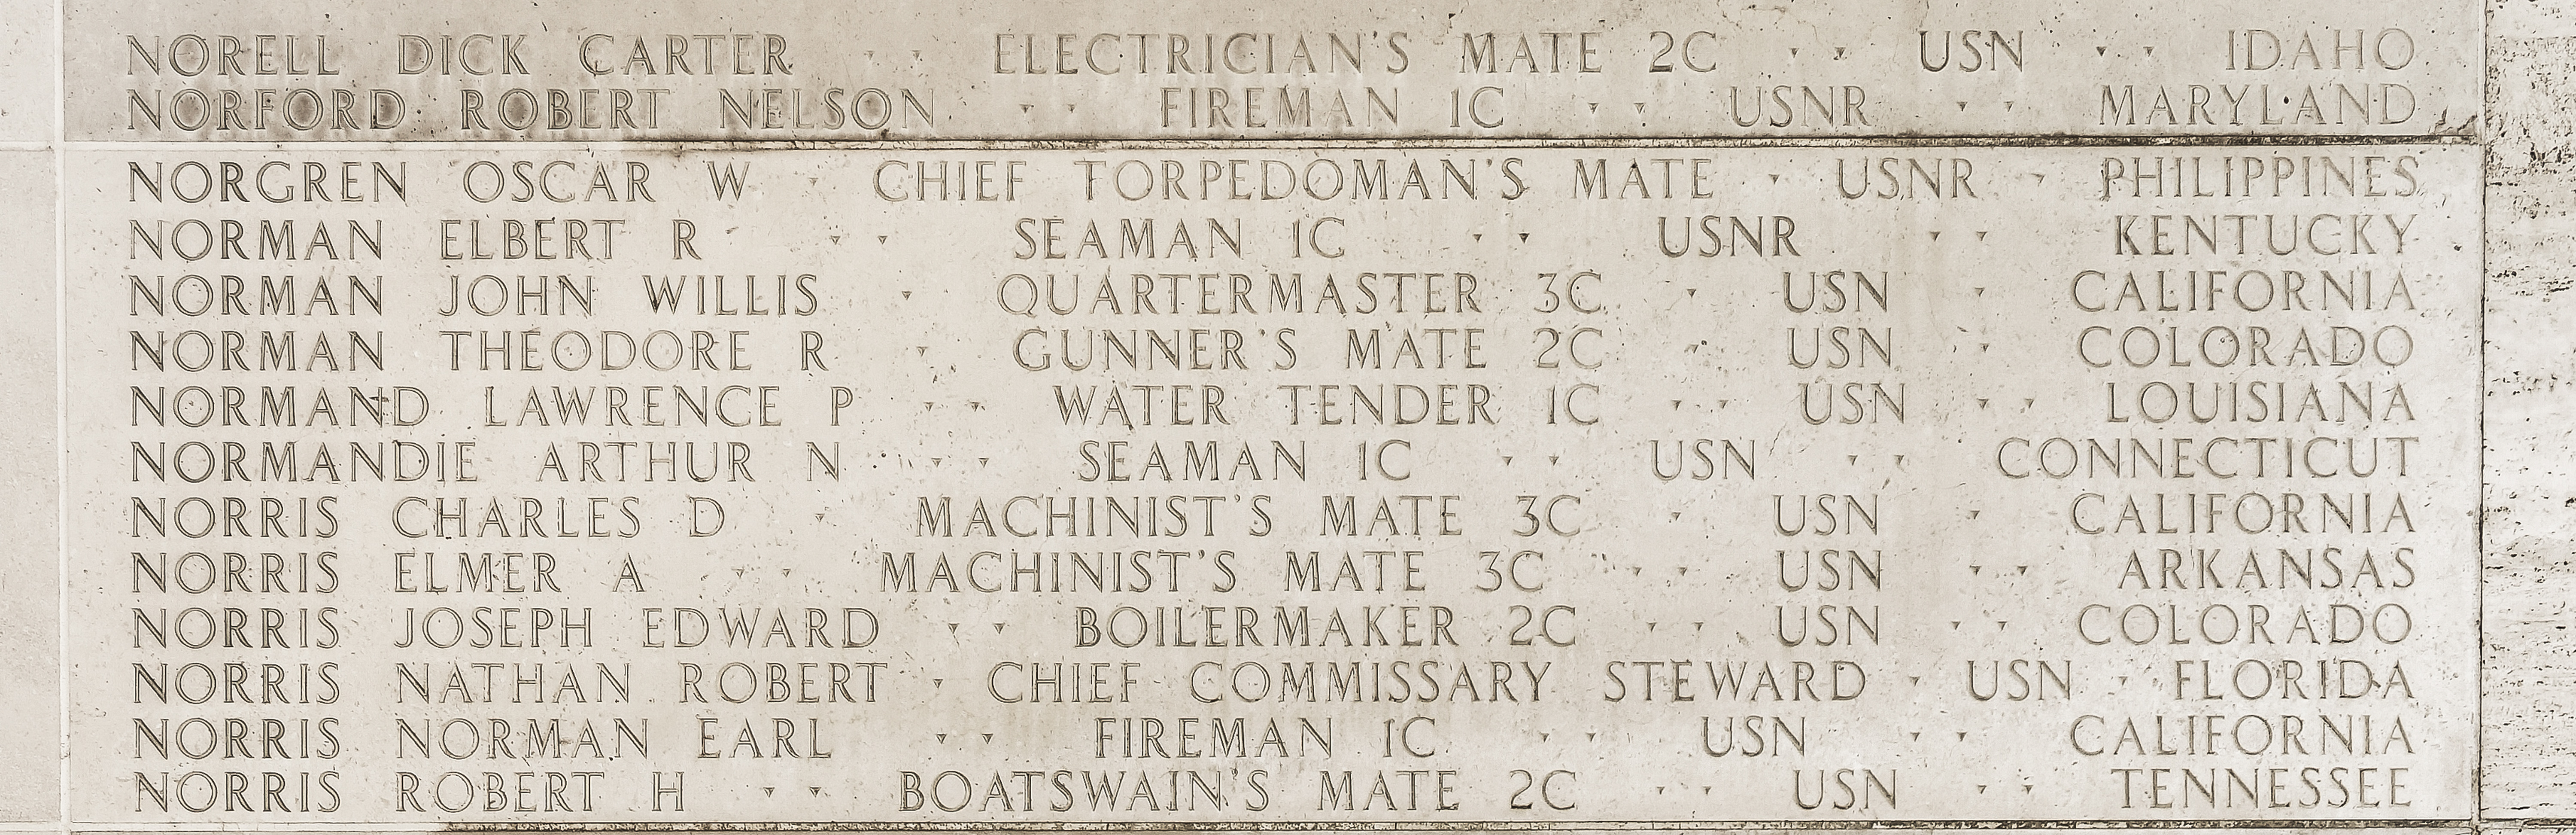 Joseph Edward Norris, Boilermaker Second Class